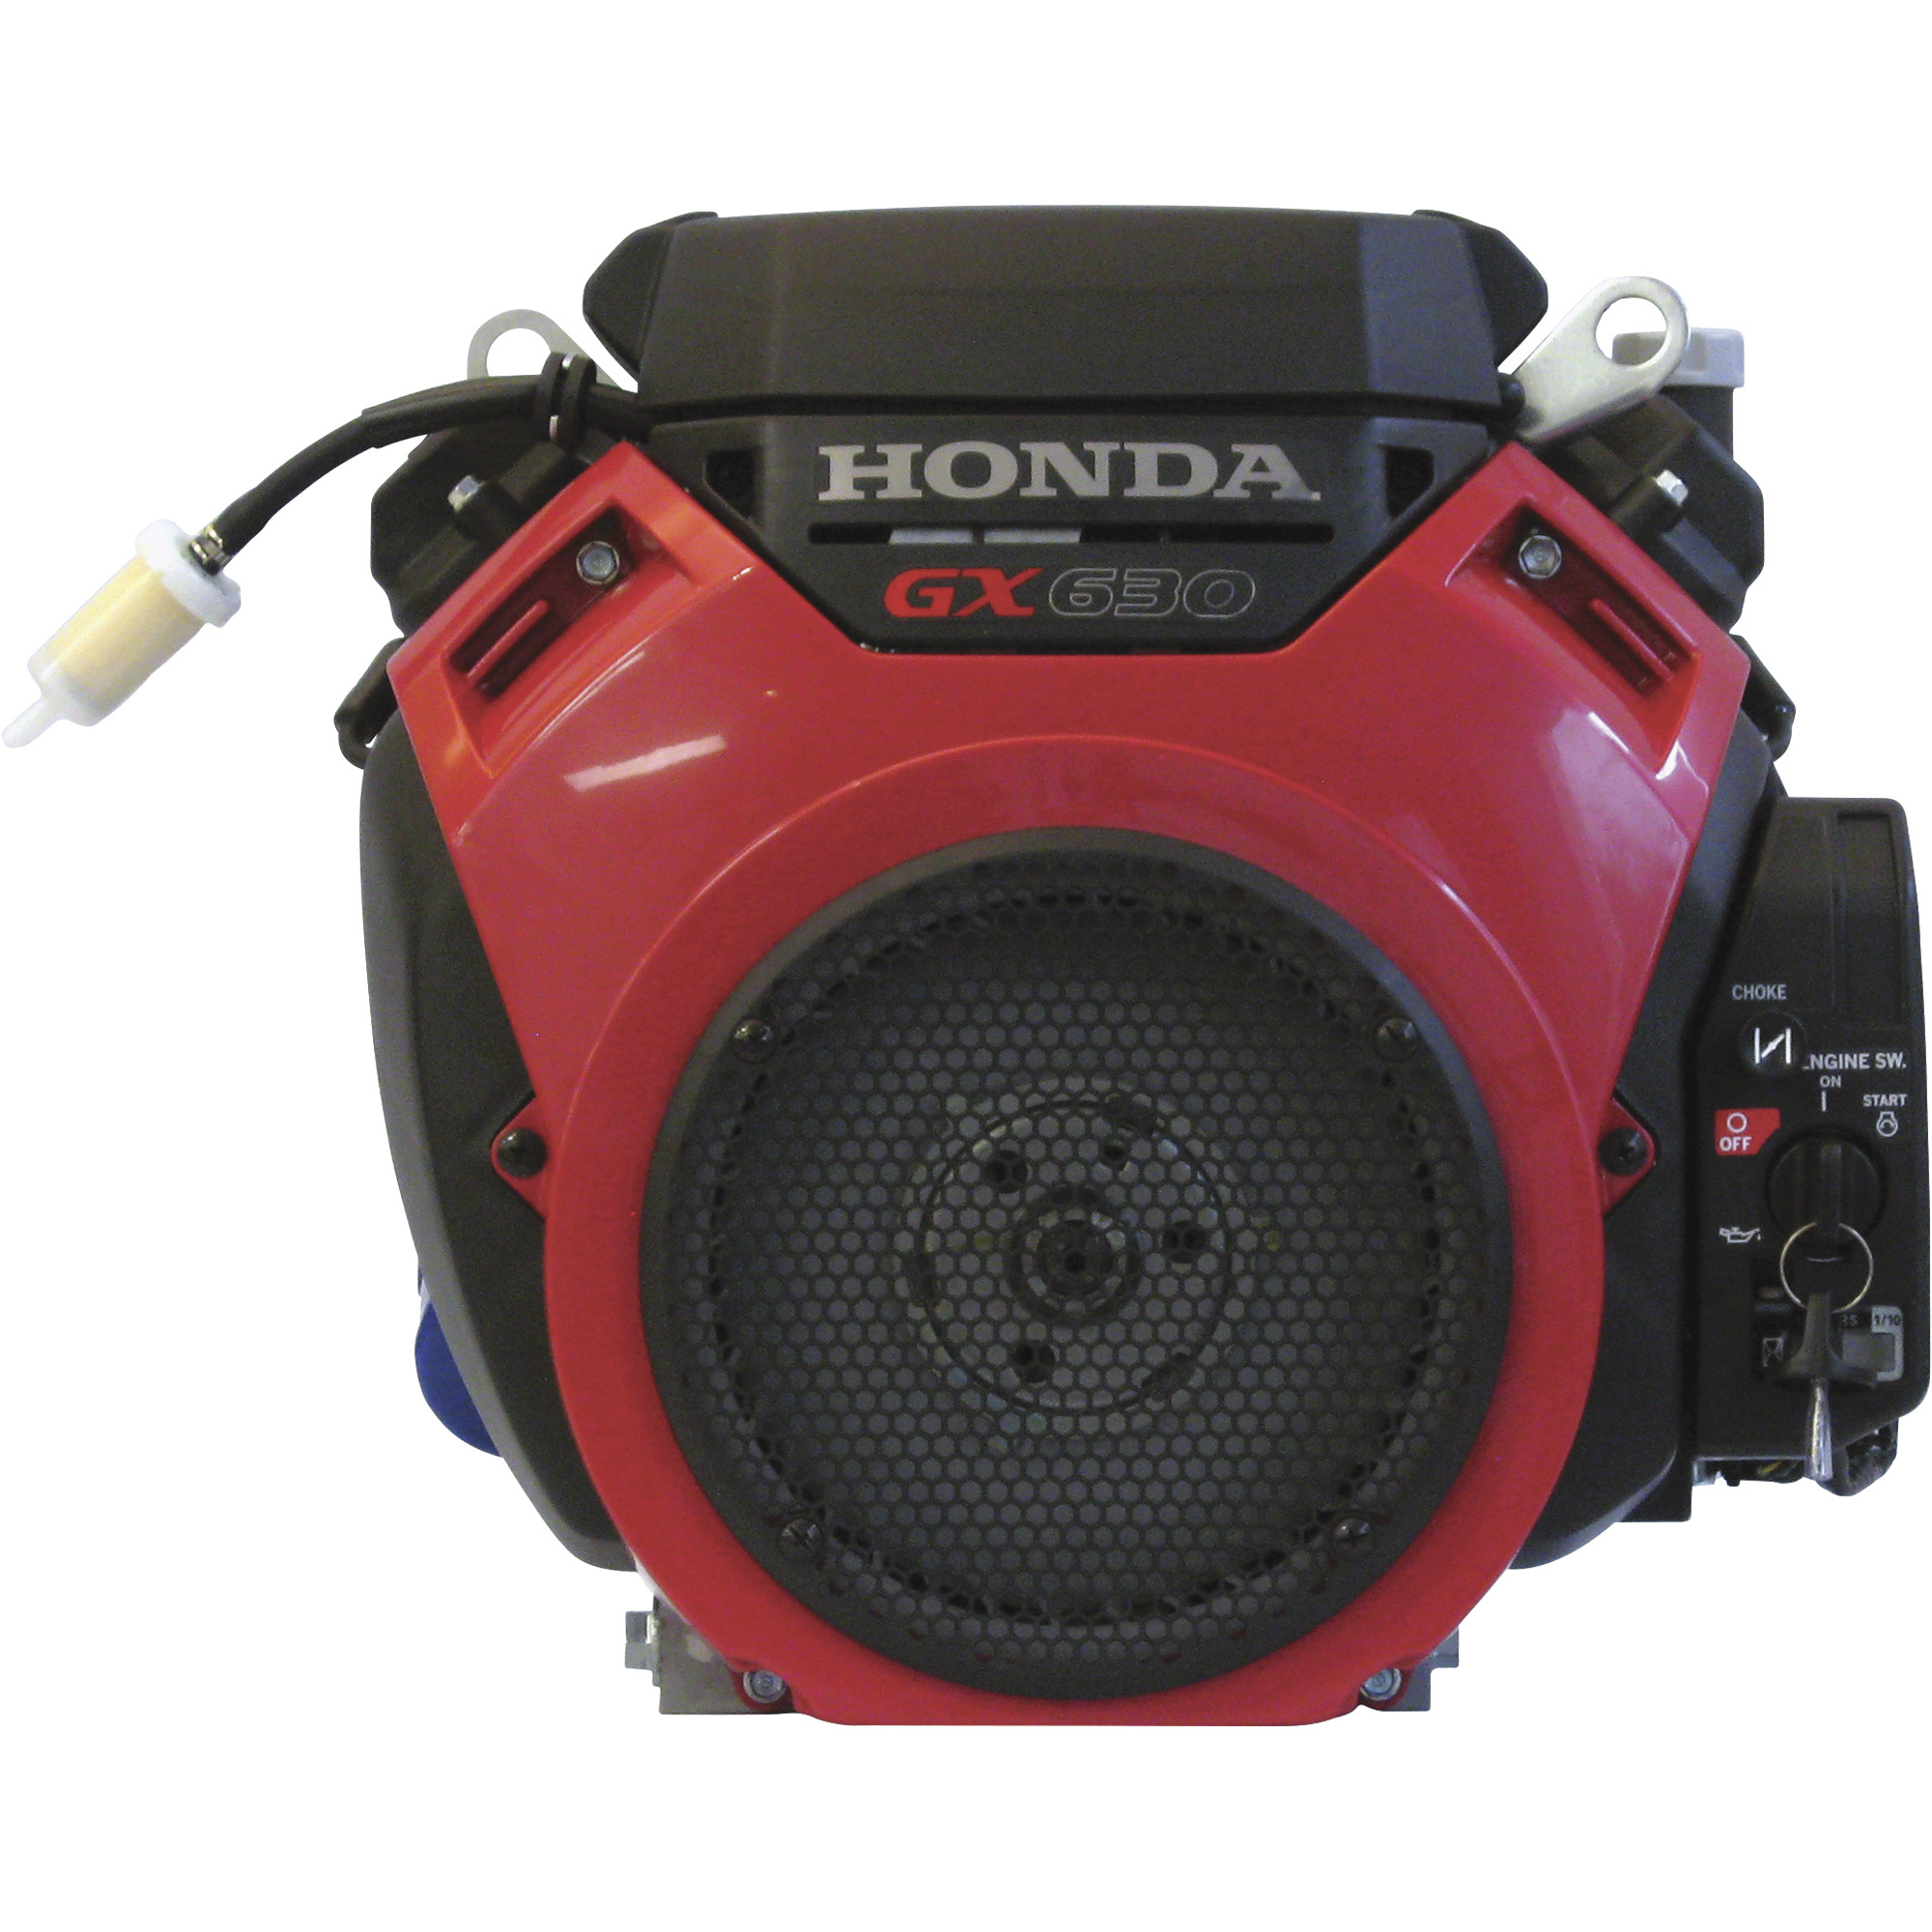 Honda V-Twin Horizontal OHV Engine with Electric Start â 688cc, GX Series, Model GX630RHQZB3